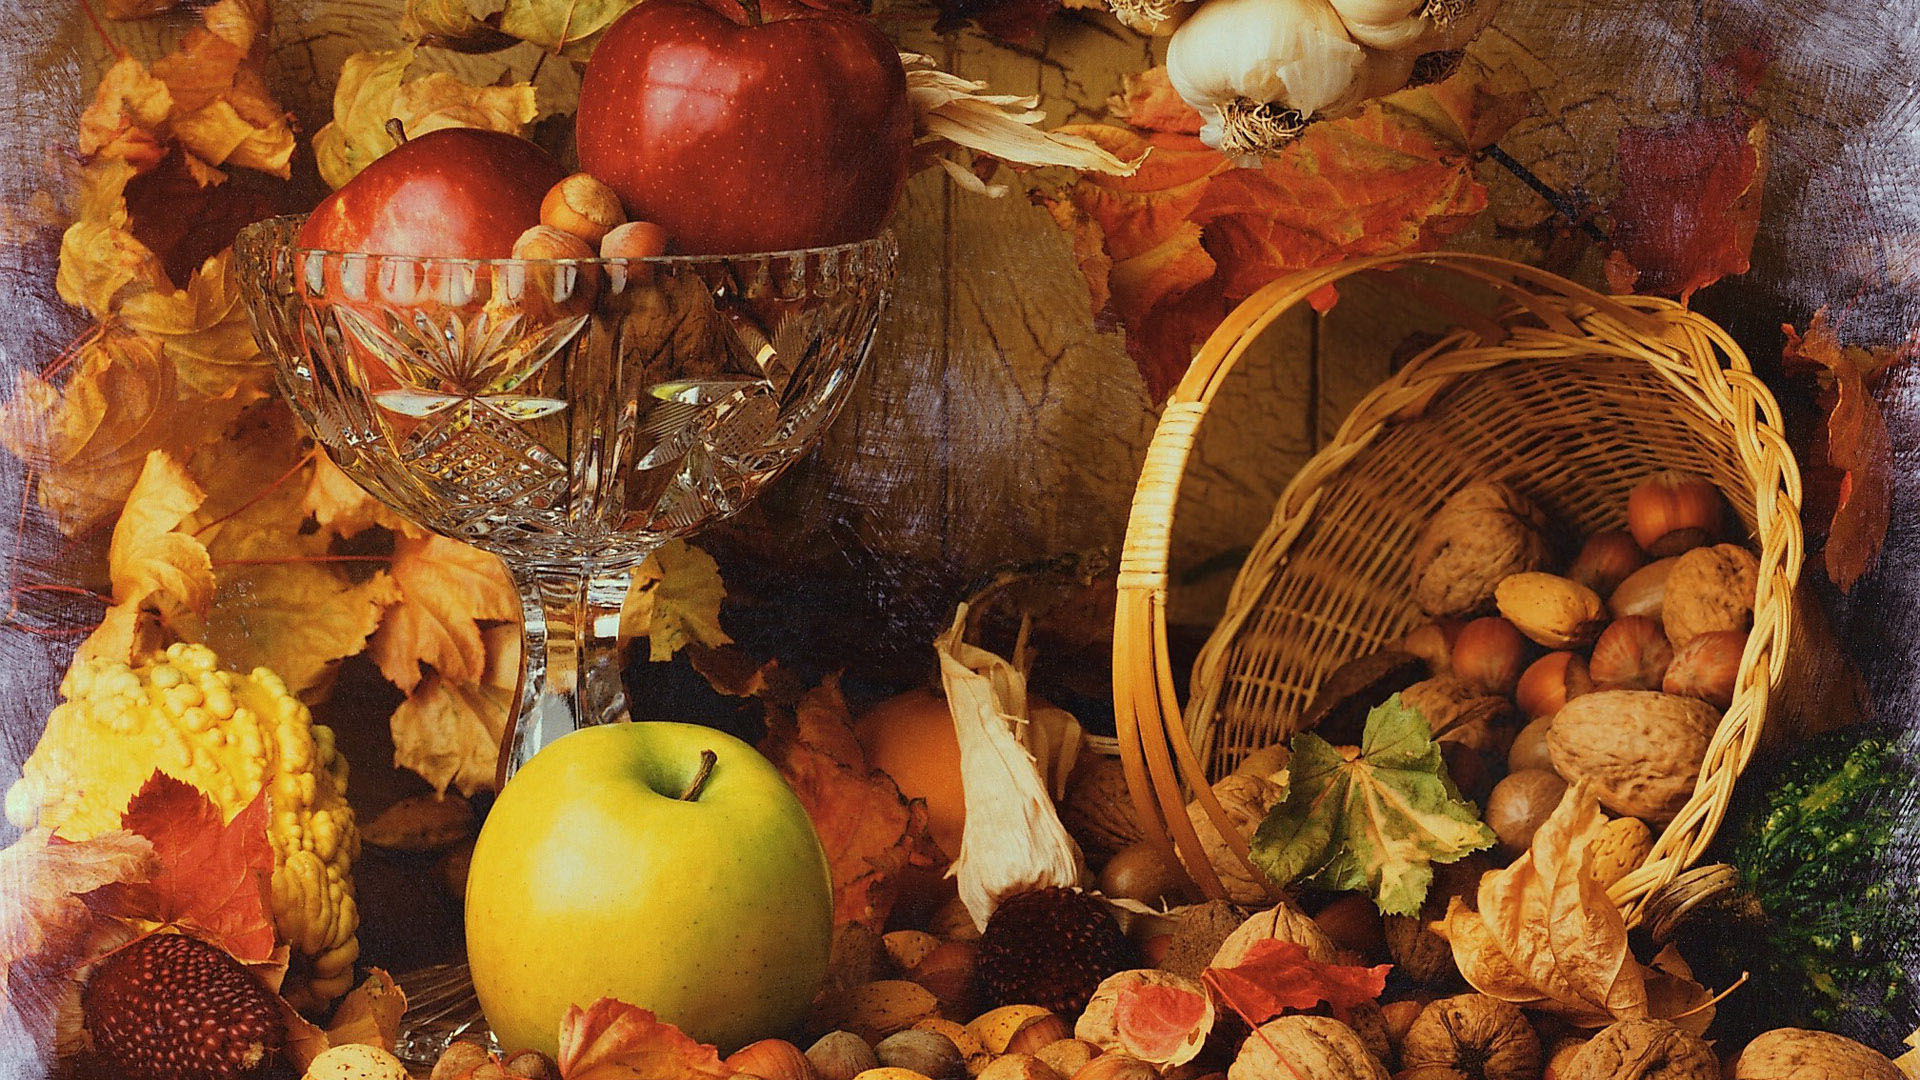 Thanksgiving Wallpaper HD